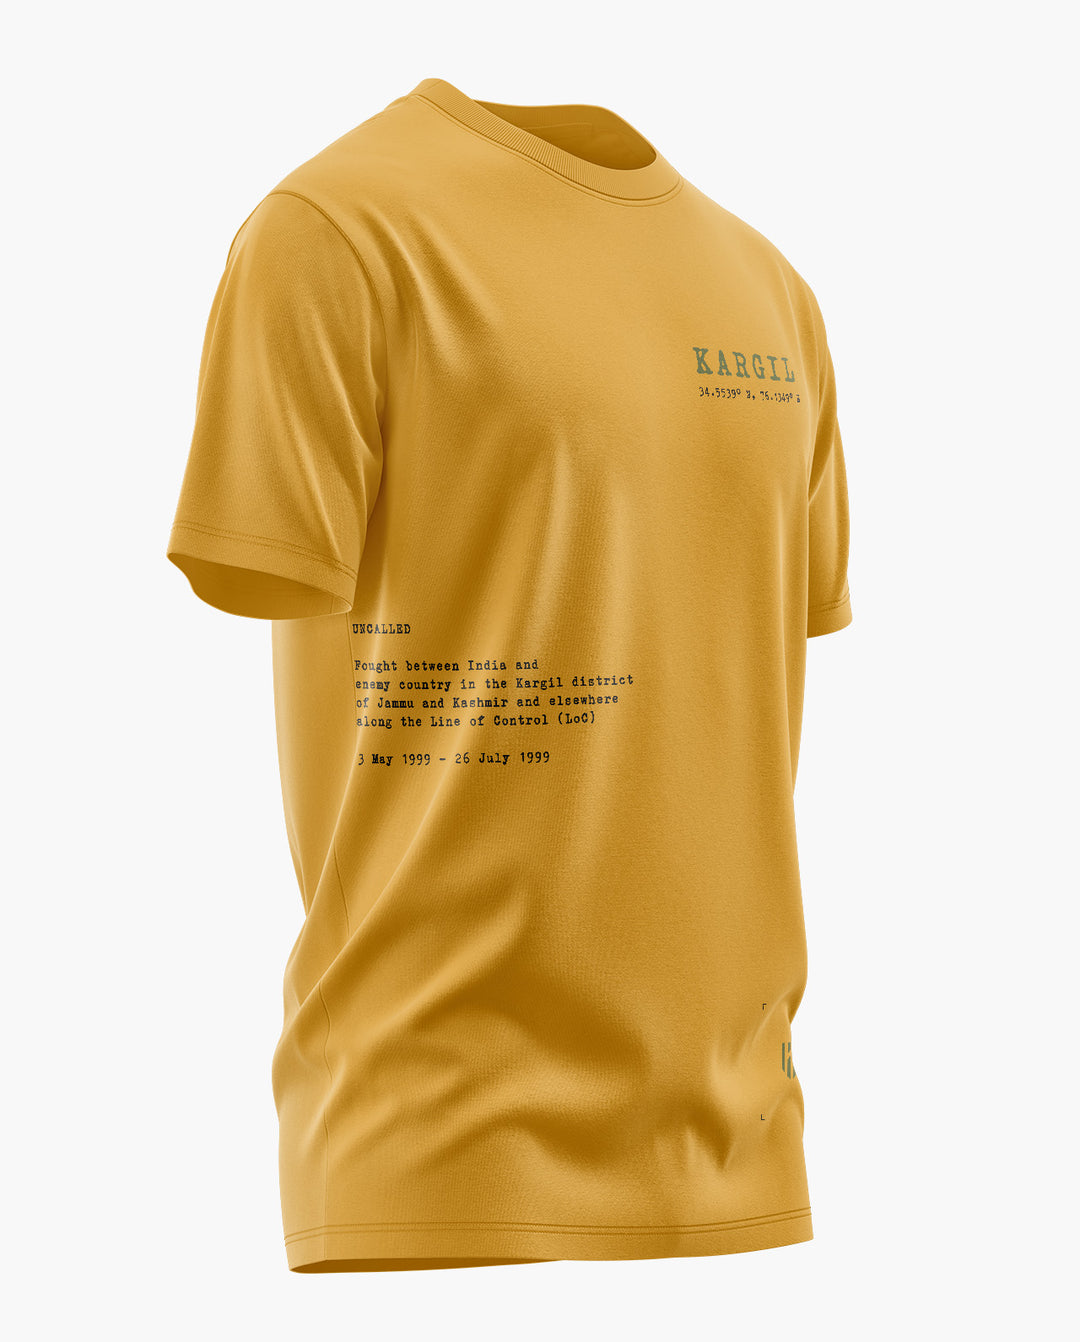 KARGIL War 1999 T-Shirt